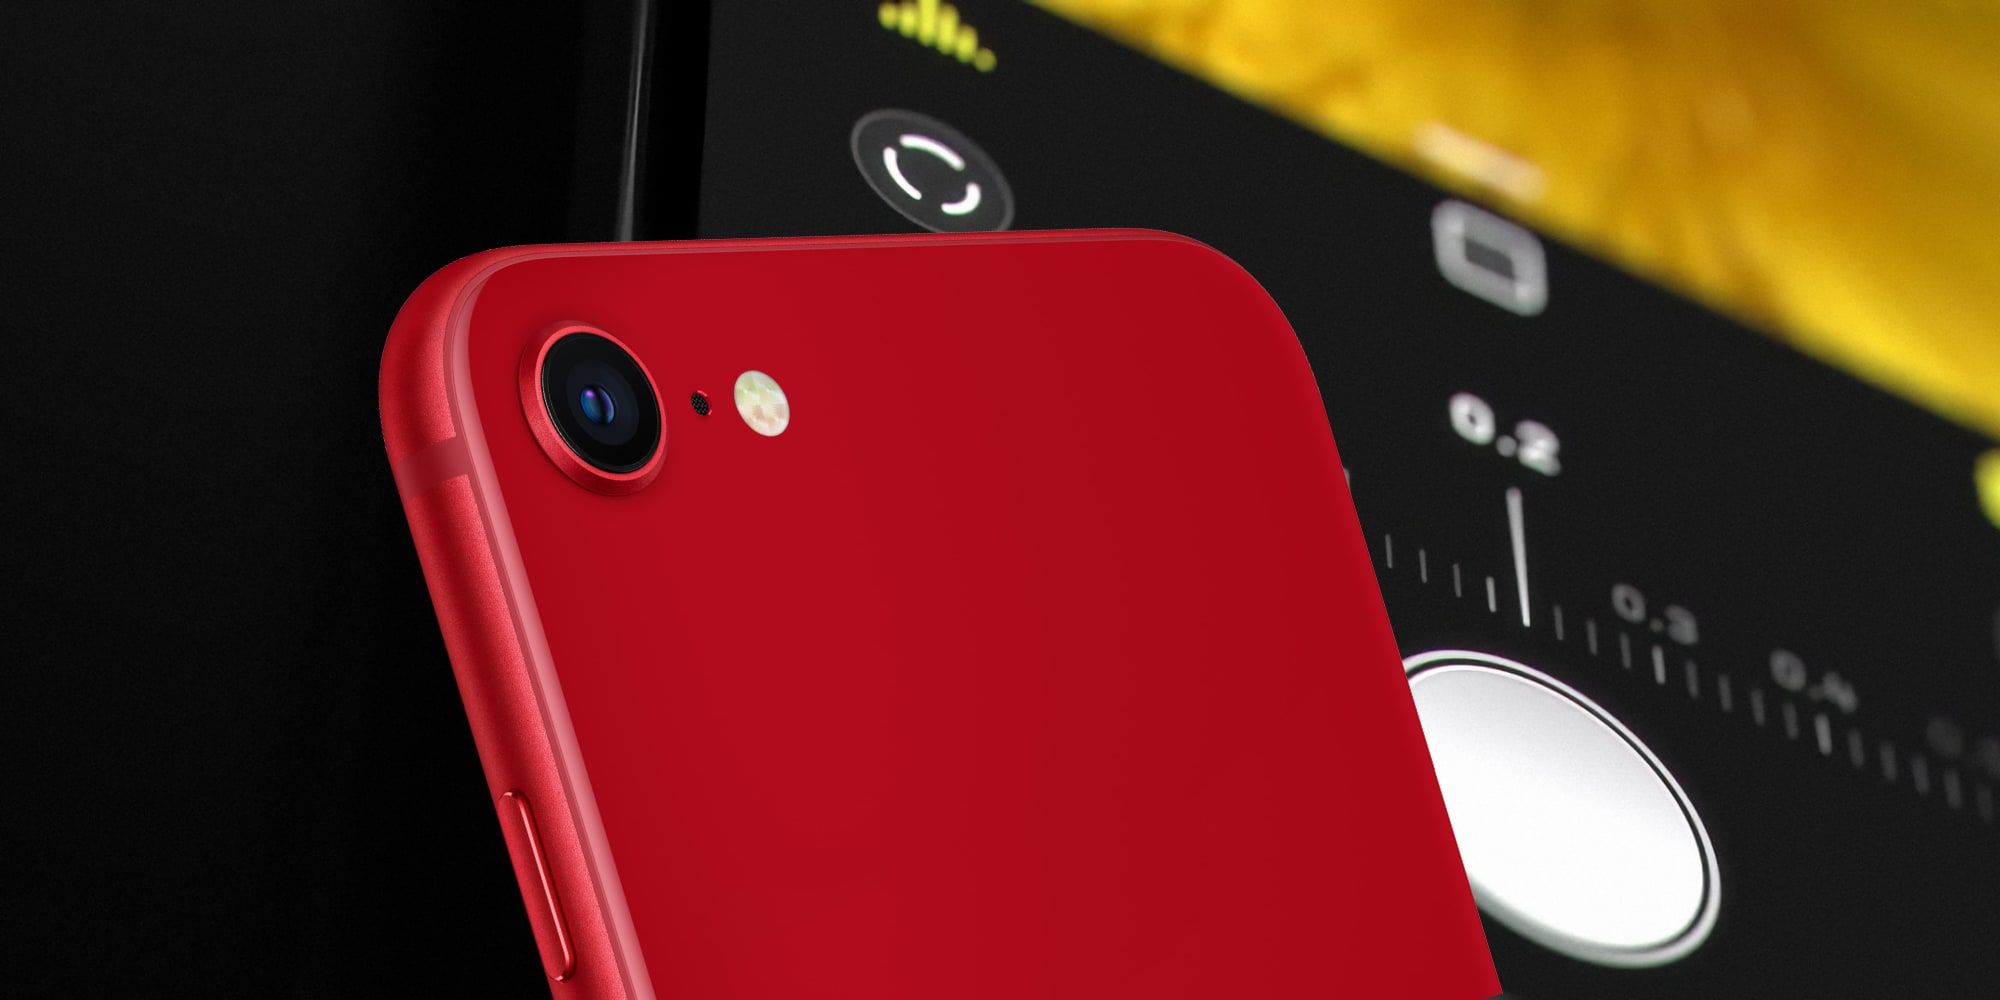 Apple iPhone SE 3 Red Over Halide Macro Mode Image